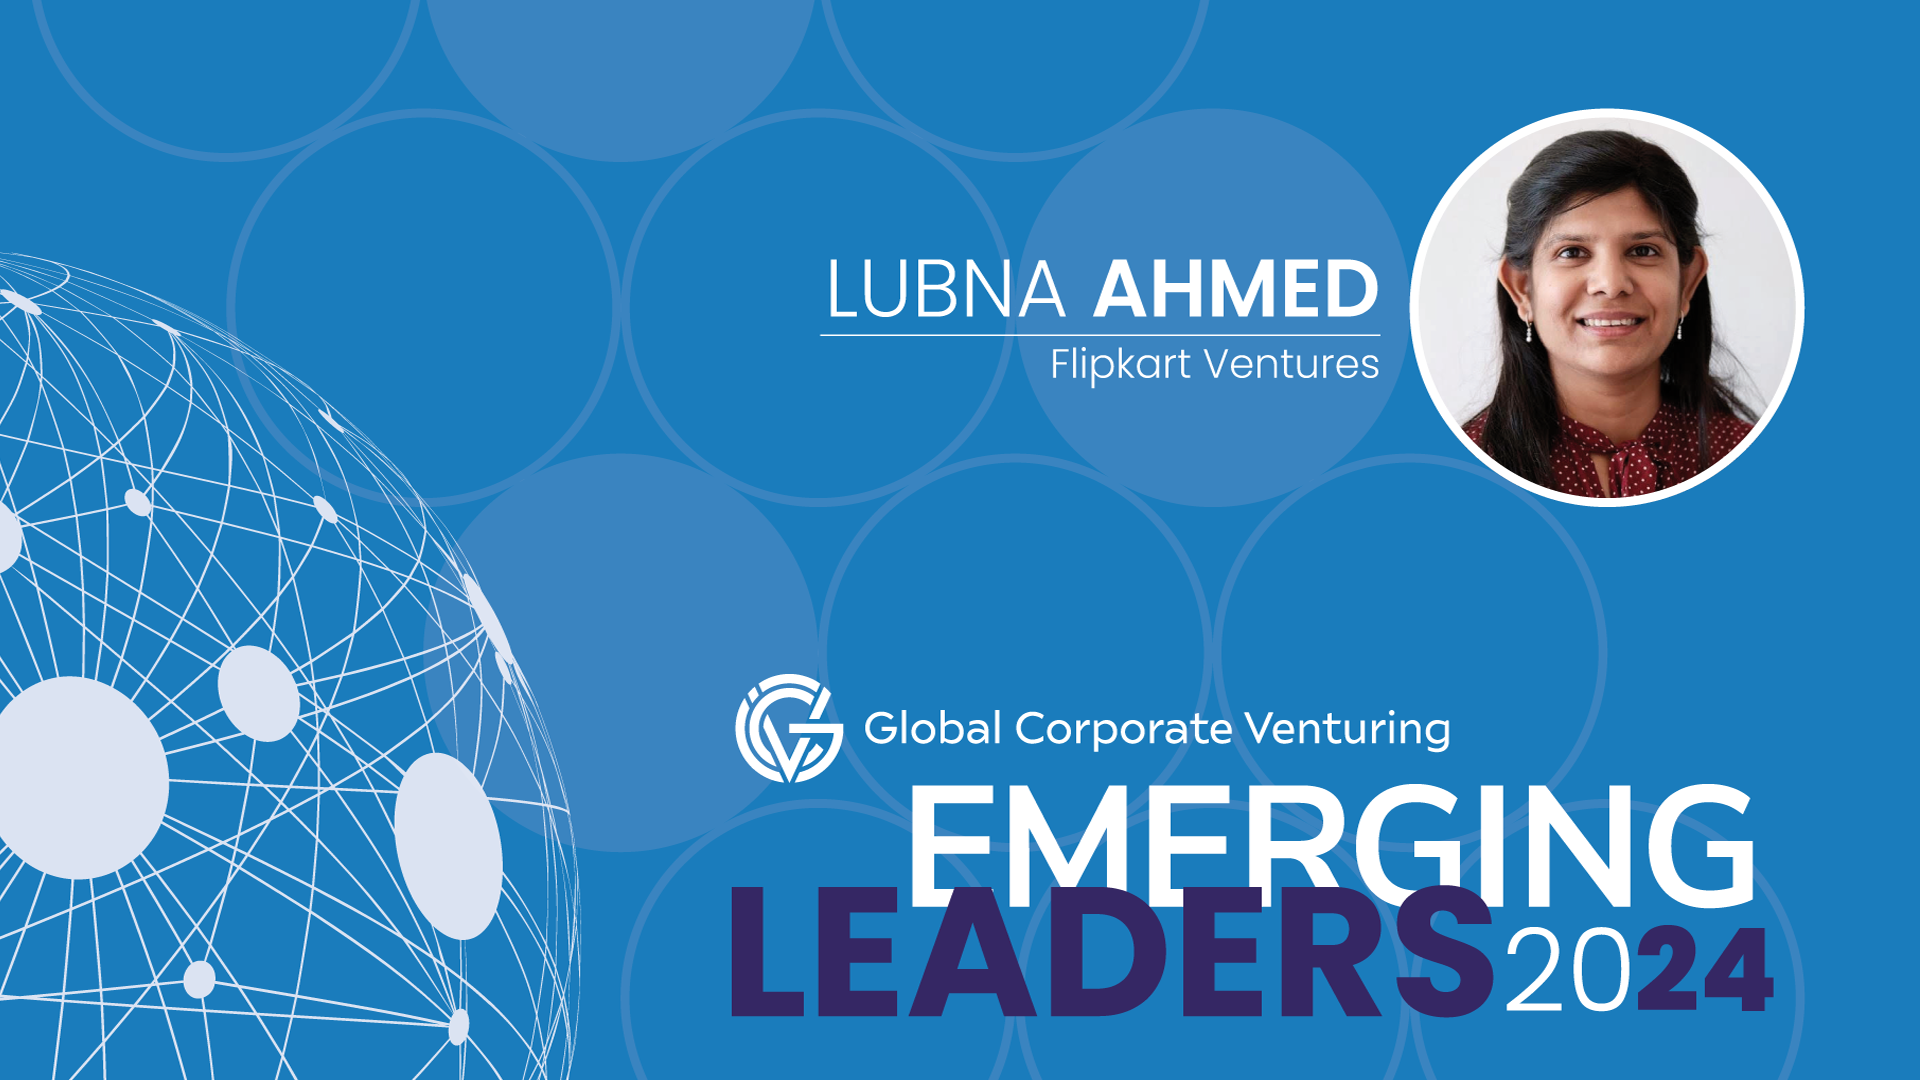 Lubna Ahmed, Flipkart Ventures